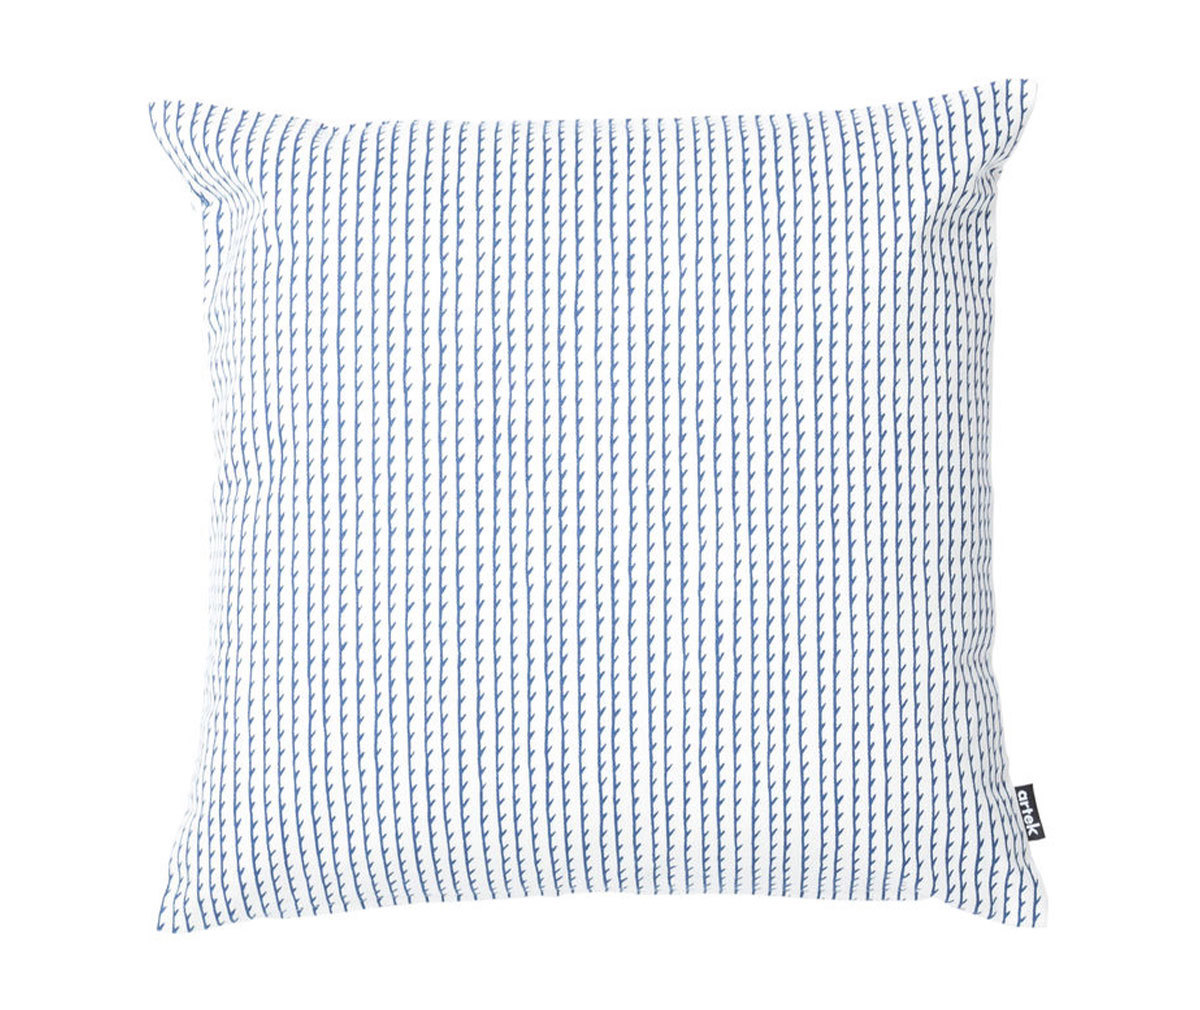 Artek Rivi Cushion Cover White/Blue, 40 x 40 cm